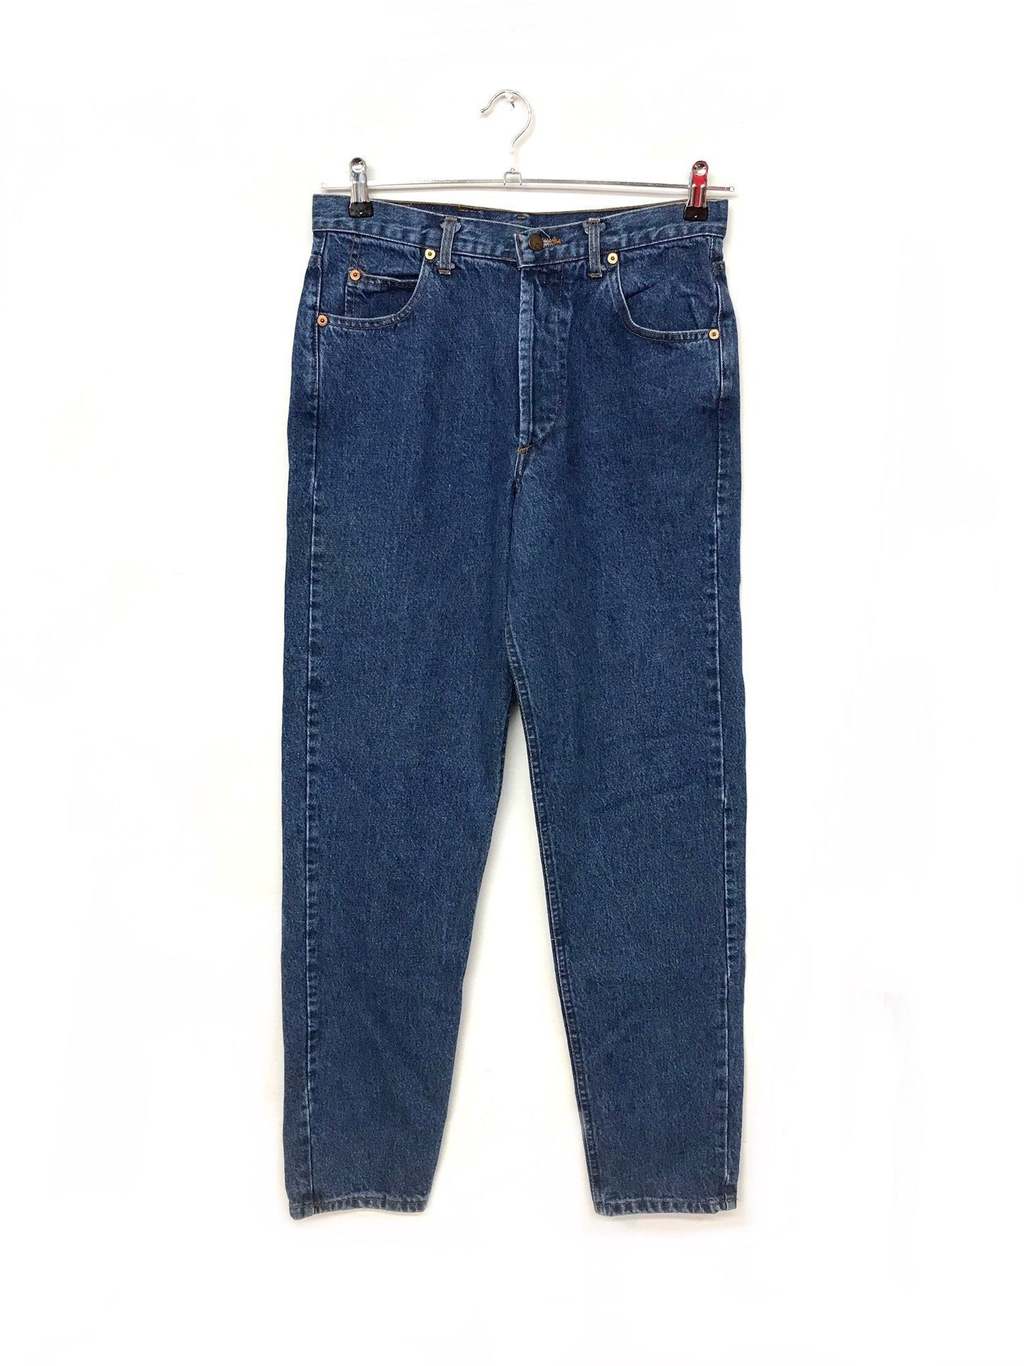 Vintage mom jeans in dark blue with high rise - W31 x L31.5 - St Cyr ...